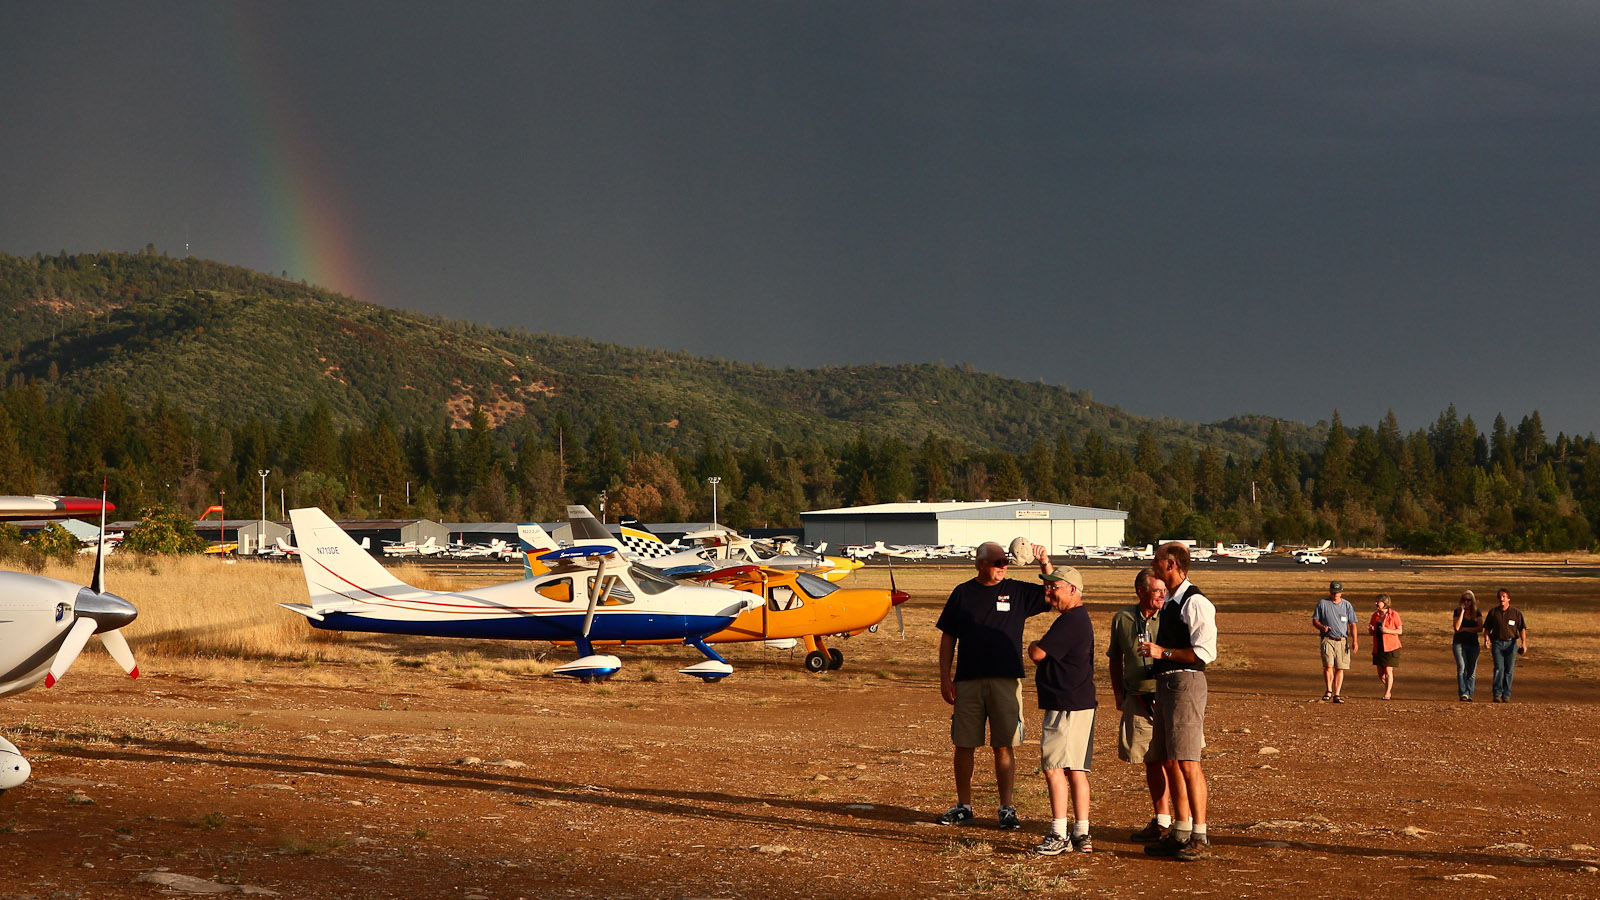 The rainbow ends at the GlaStar flightline! Photo: Arlo Reeves.